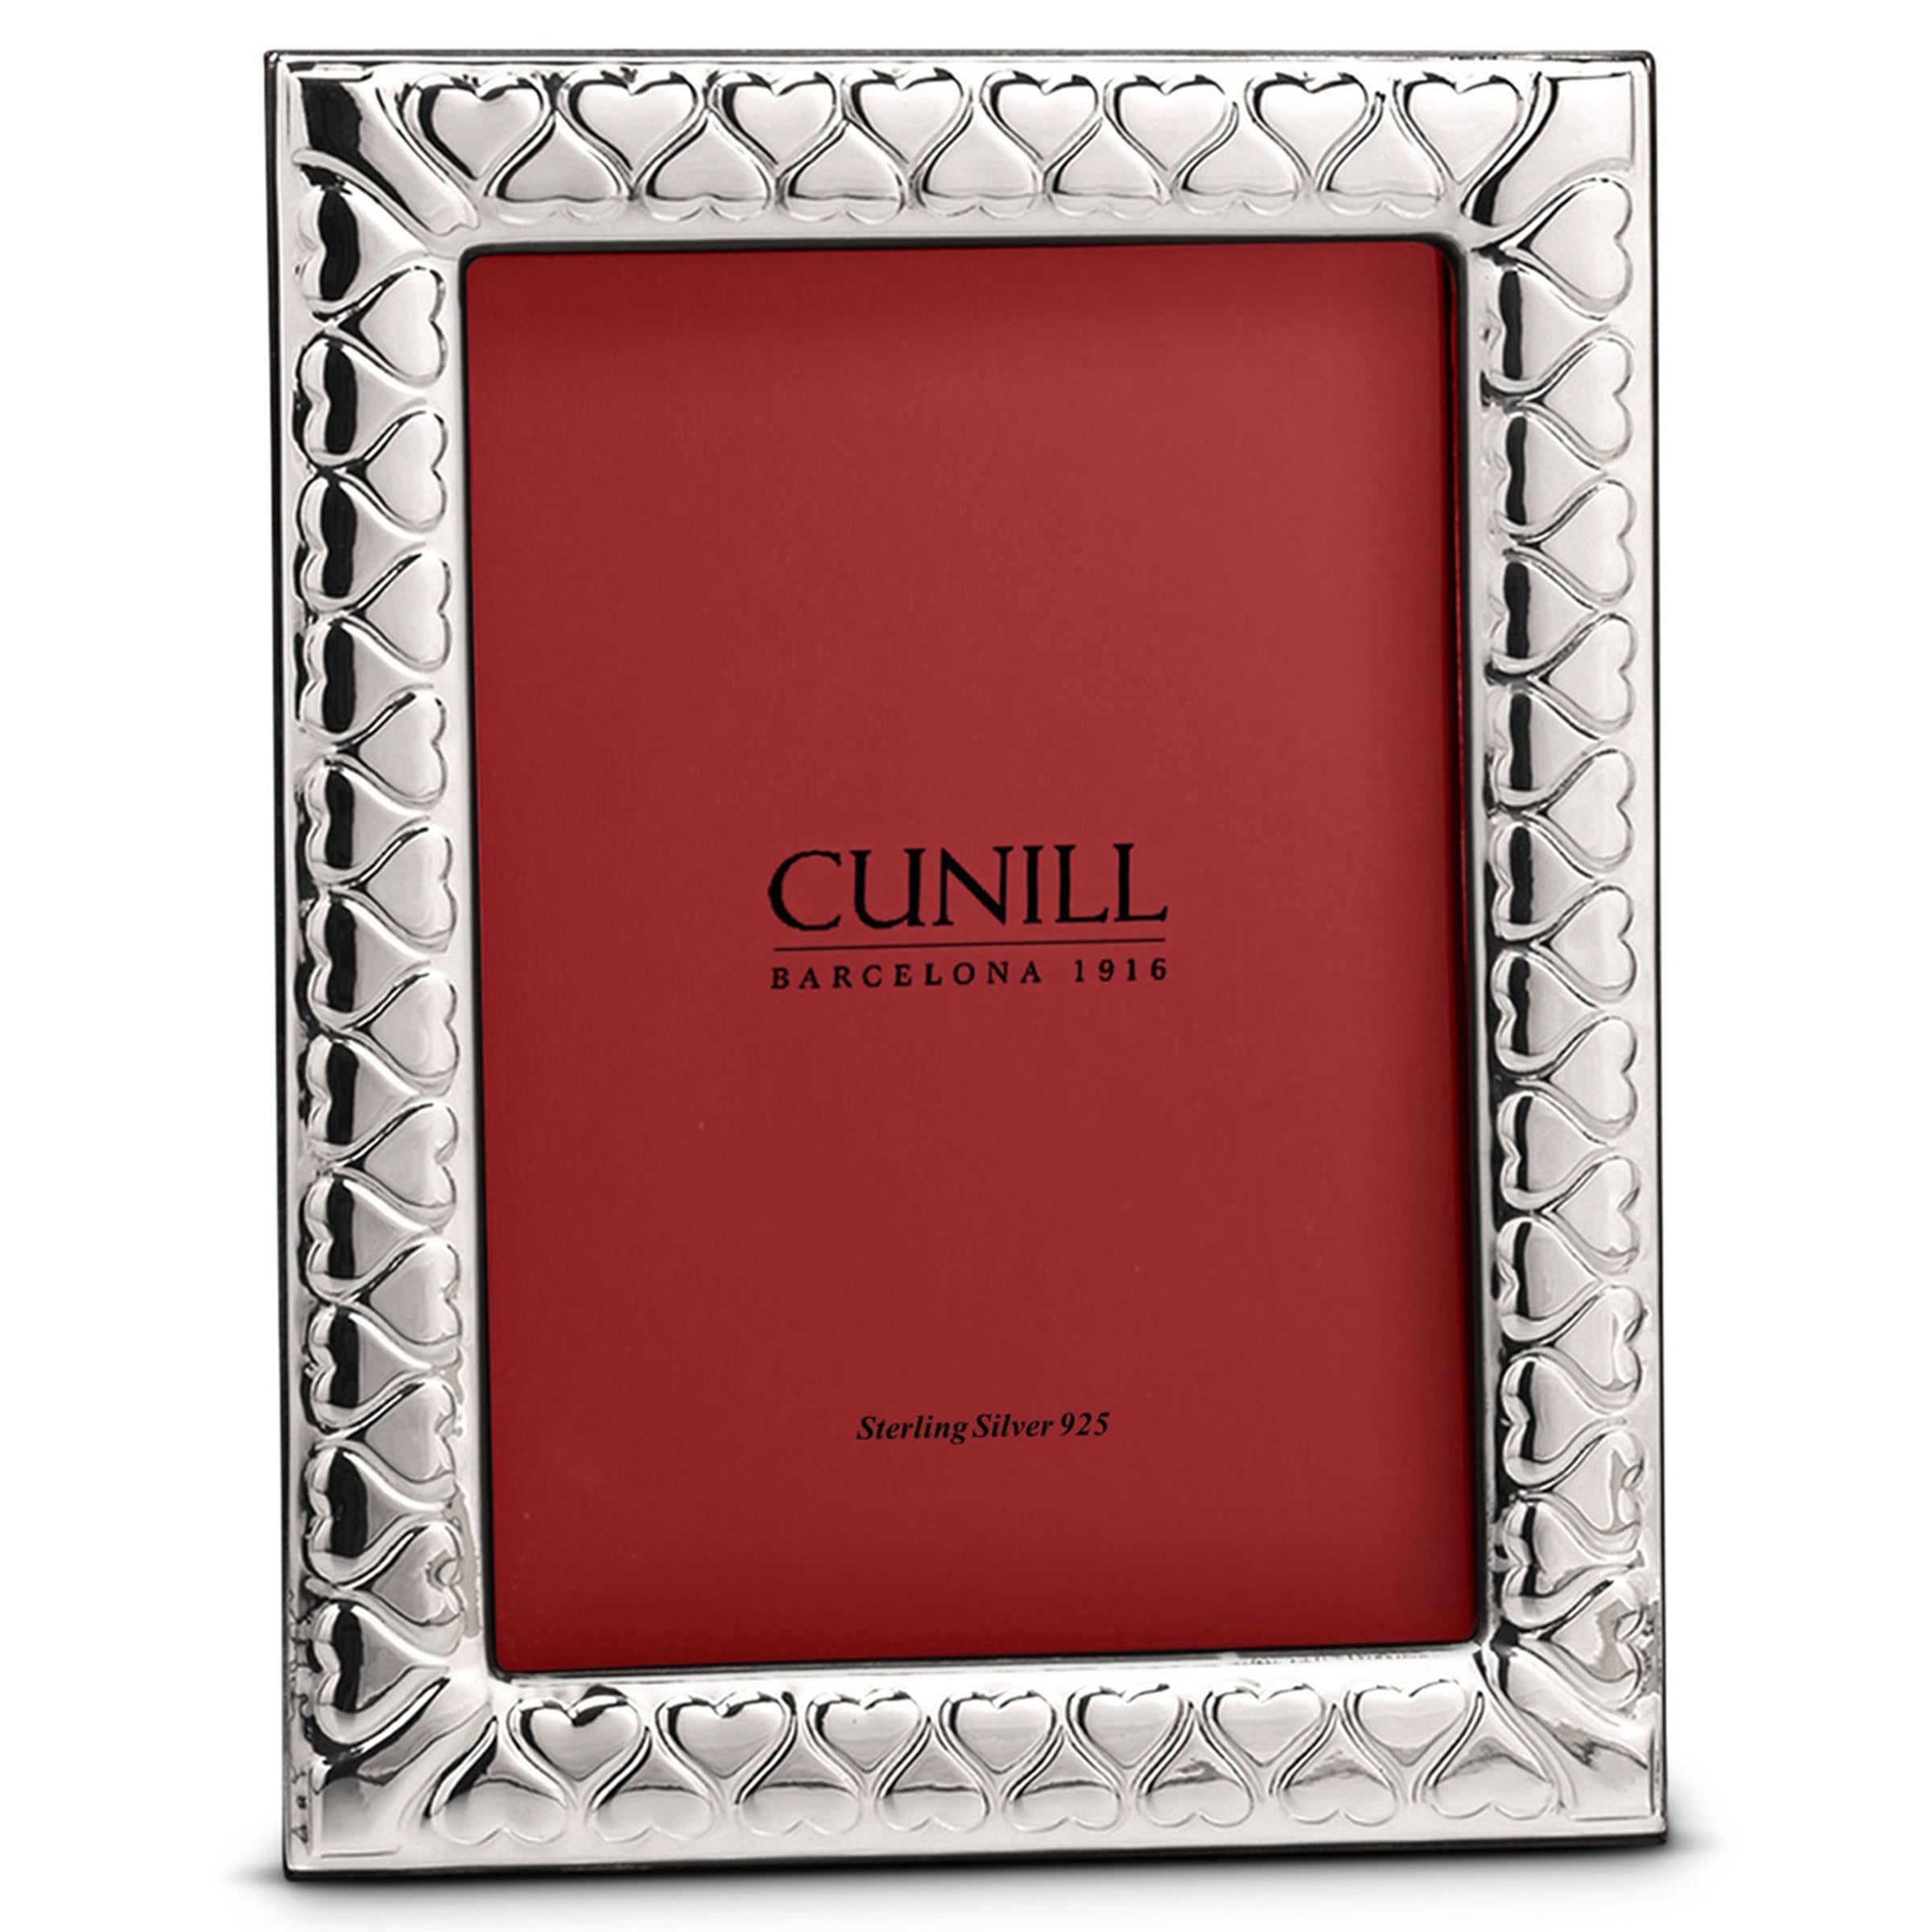 Cunill Interlocking Hearts Non-Tarnish Sterling Silver Picture Frame